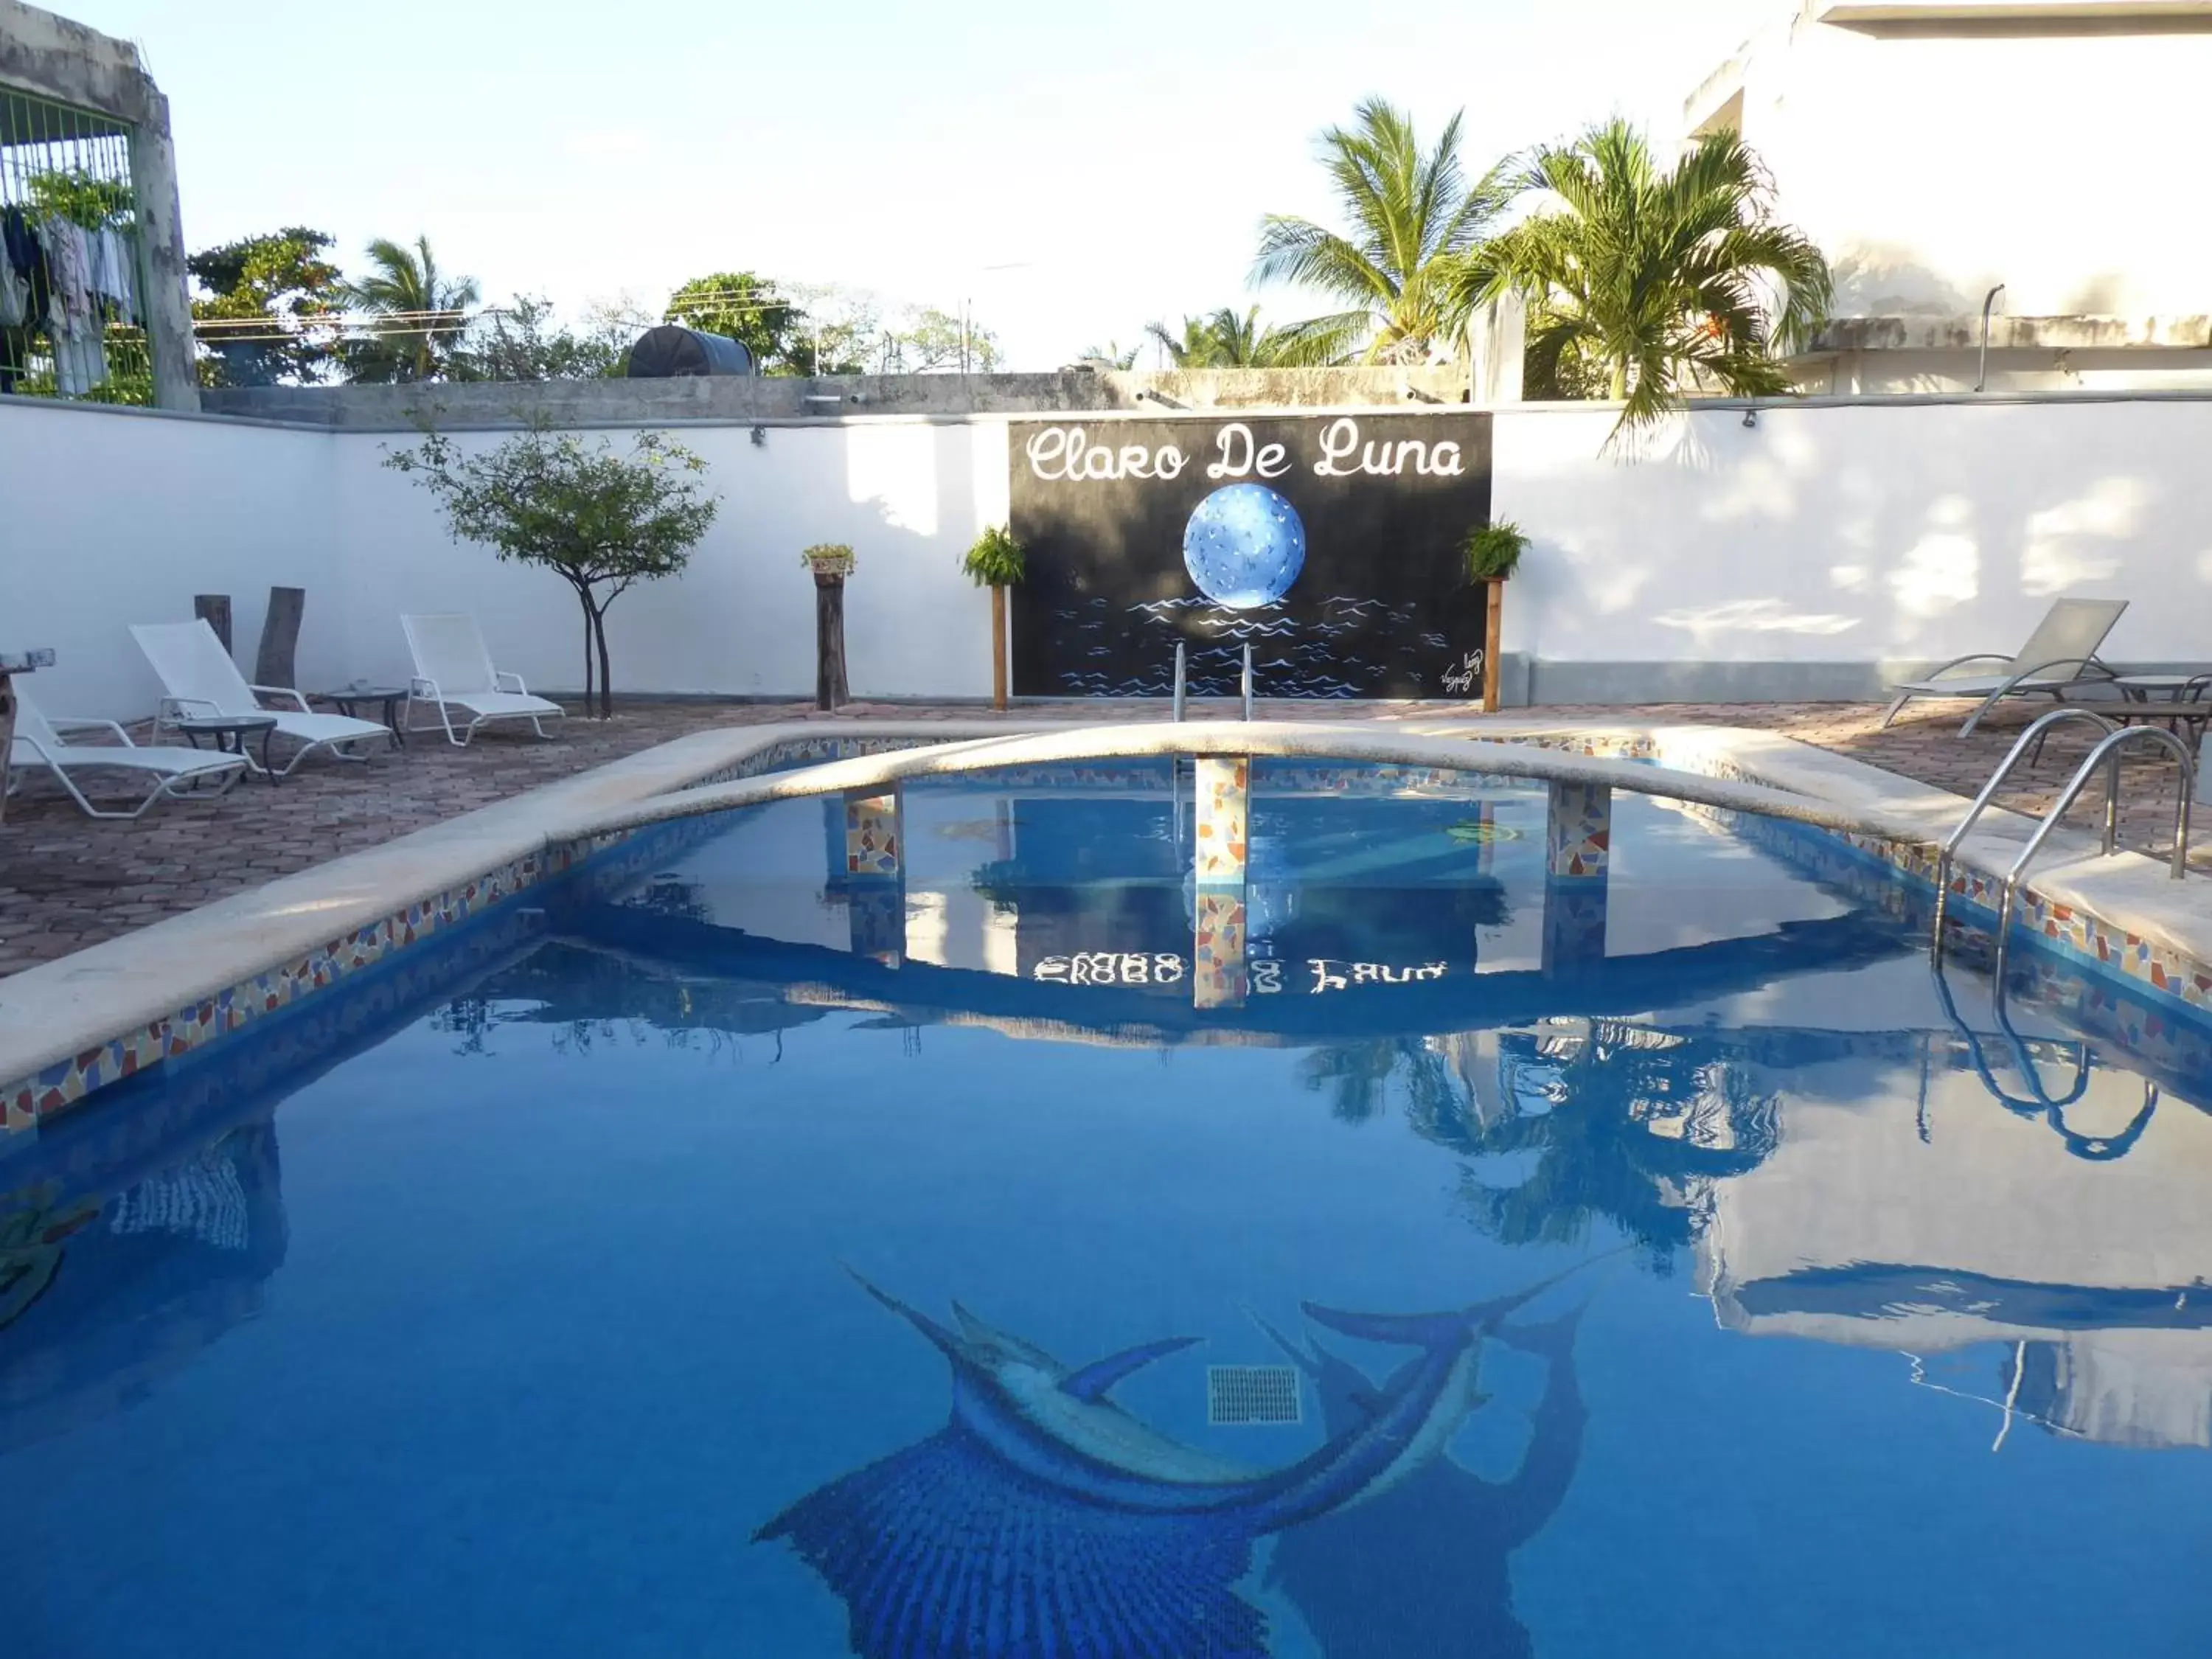 Swimming Pool in Claro de Luna